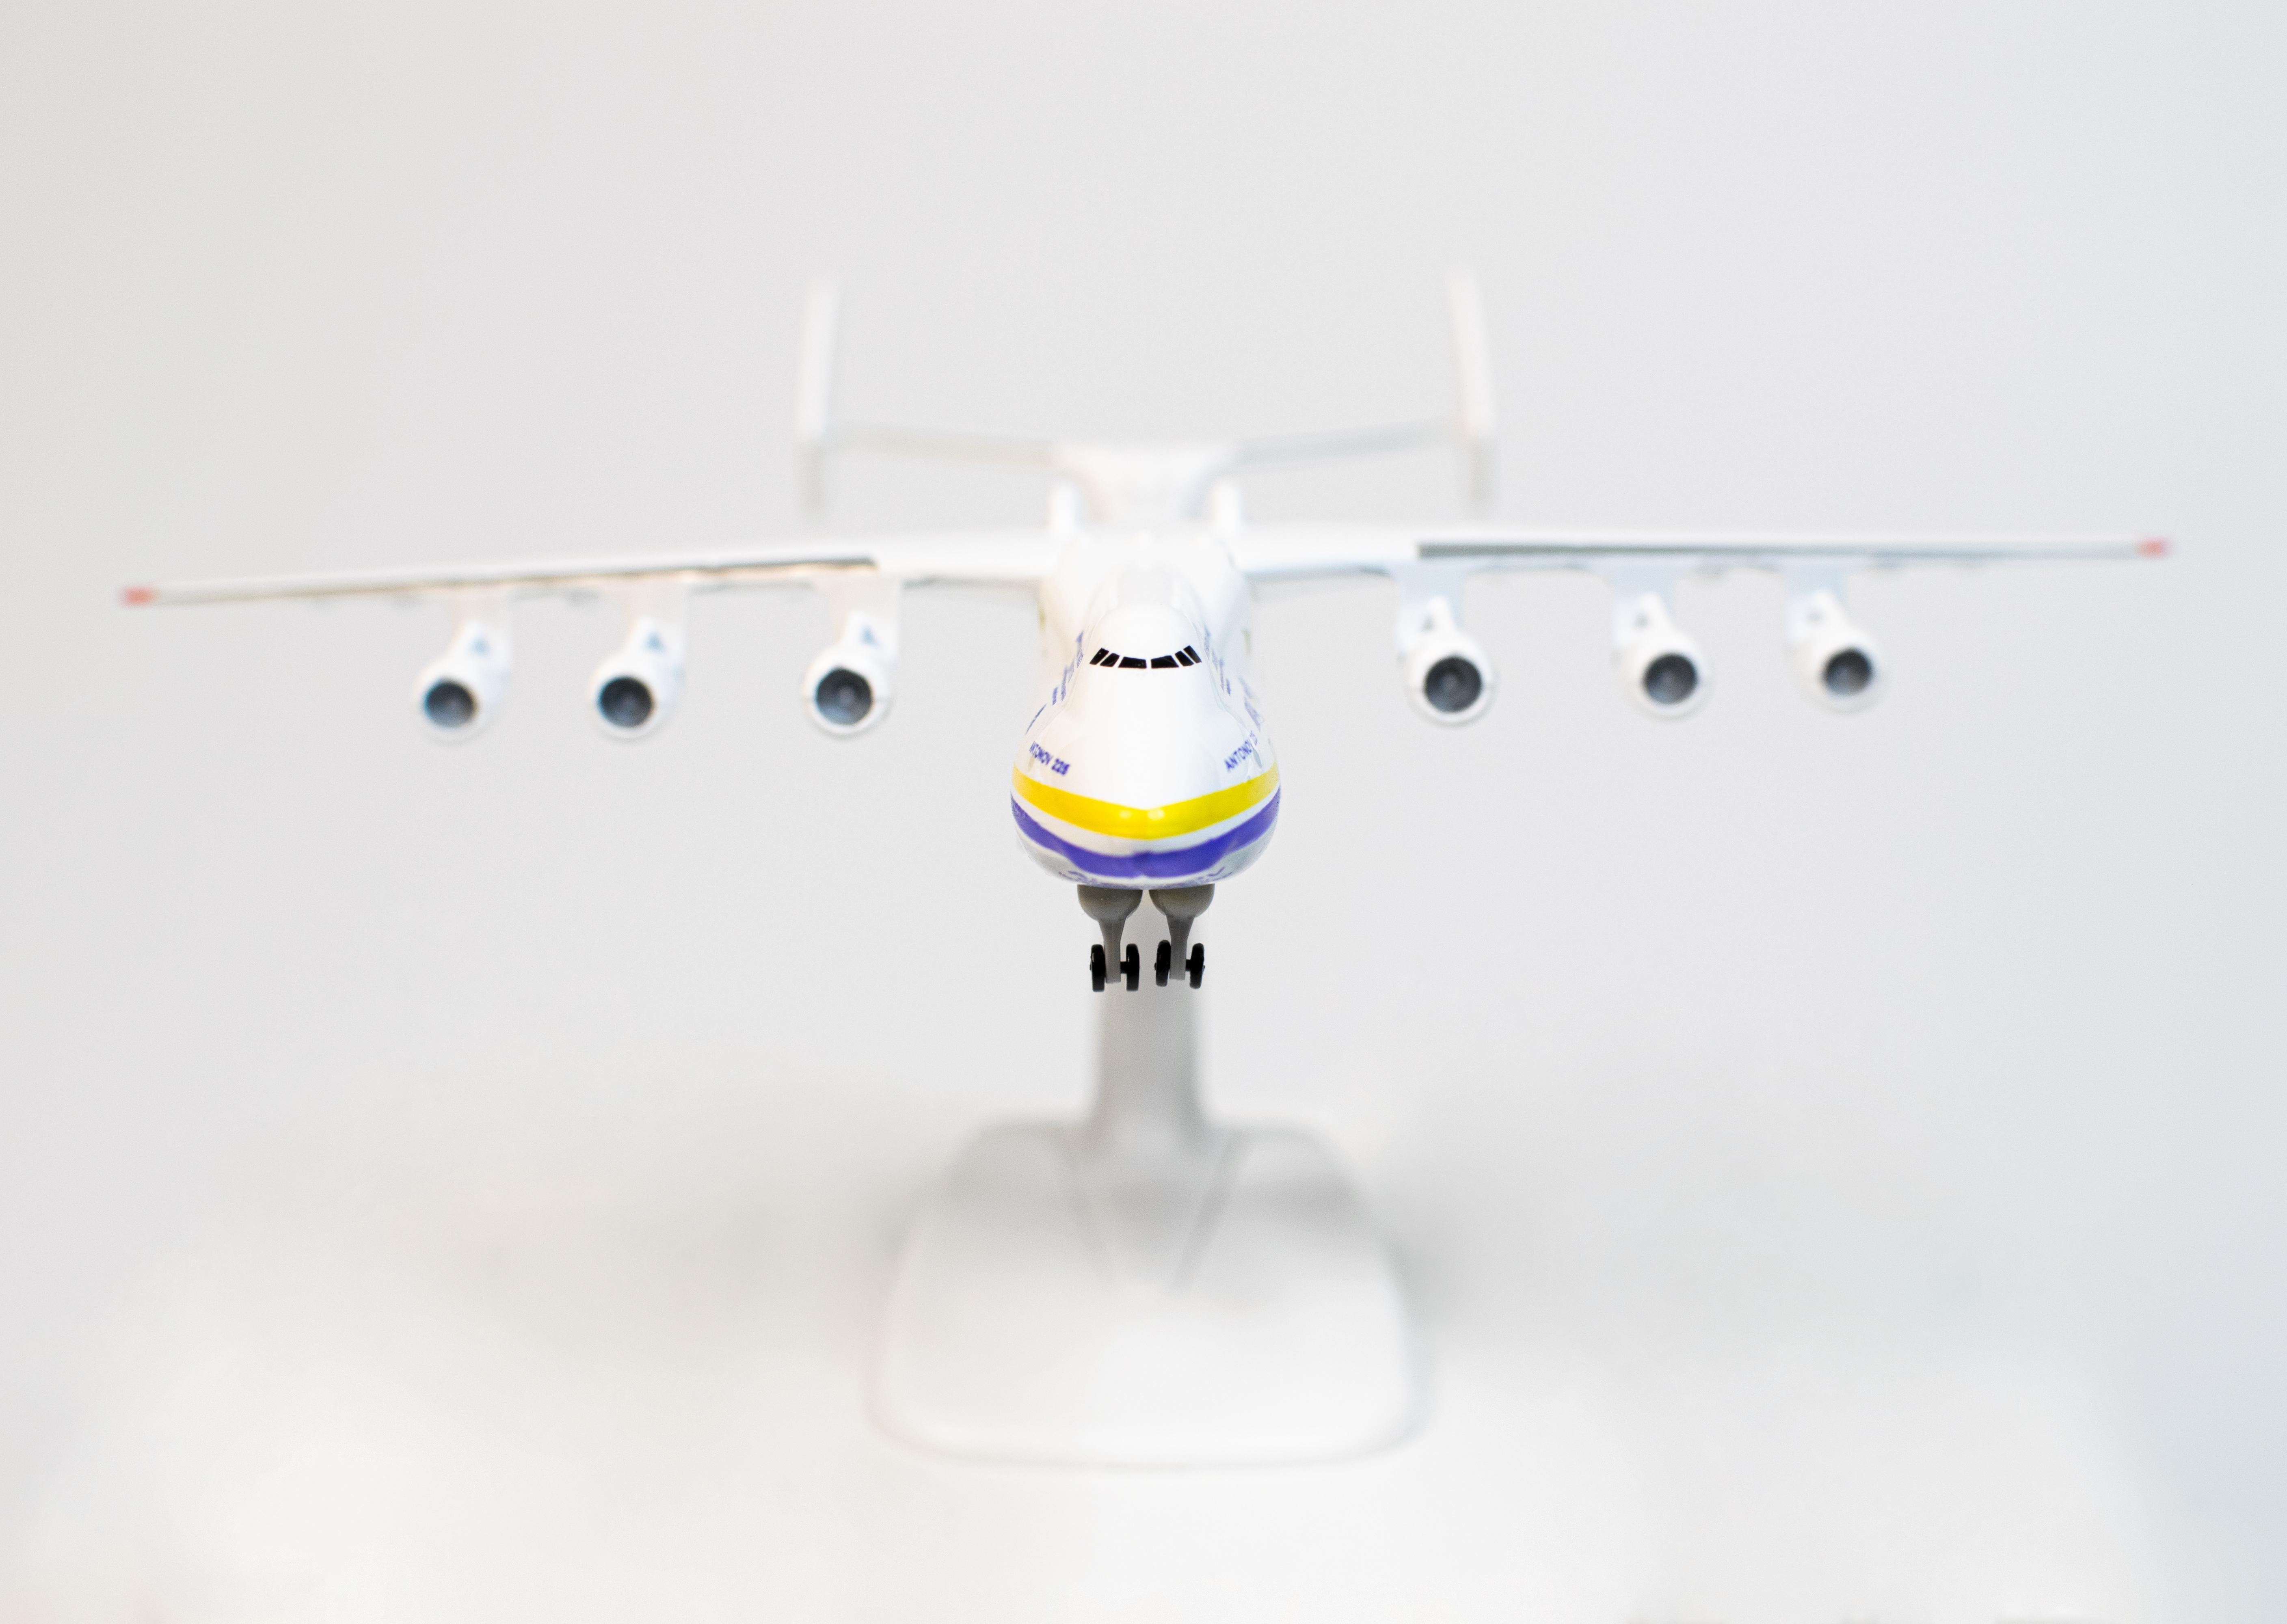 Модель літака UFT Mriya1 МРІЯ - Ан 225 масштаб: 1:400